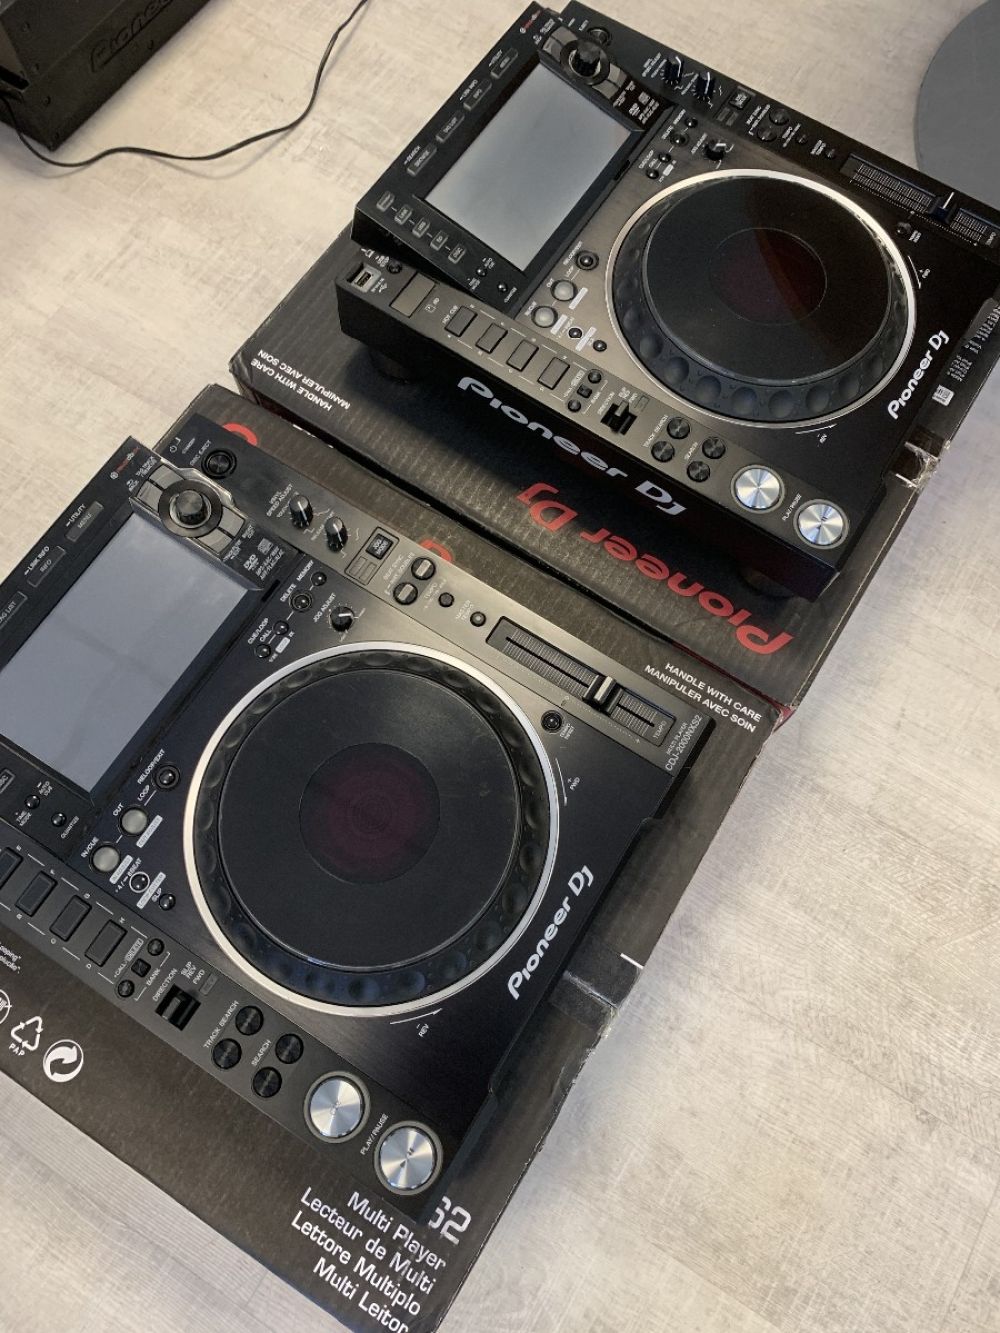 2x Pioneer CDJ-2000NXS2 + 1x DJM-900NXS2 DJ Mixer cena 2600 EUR